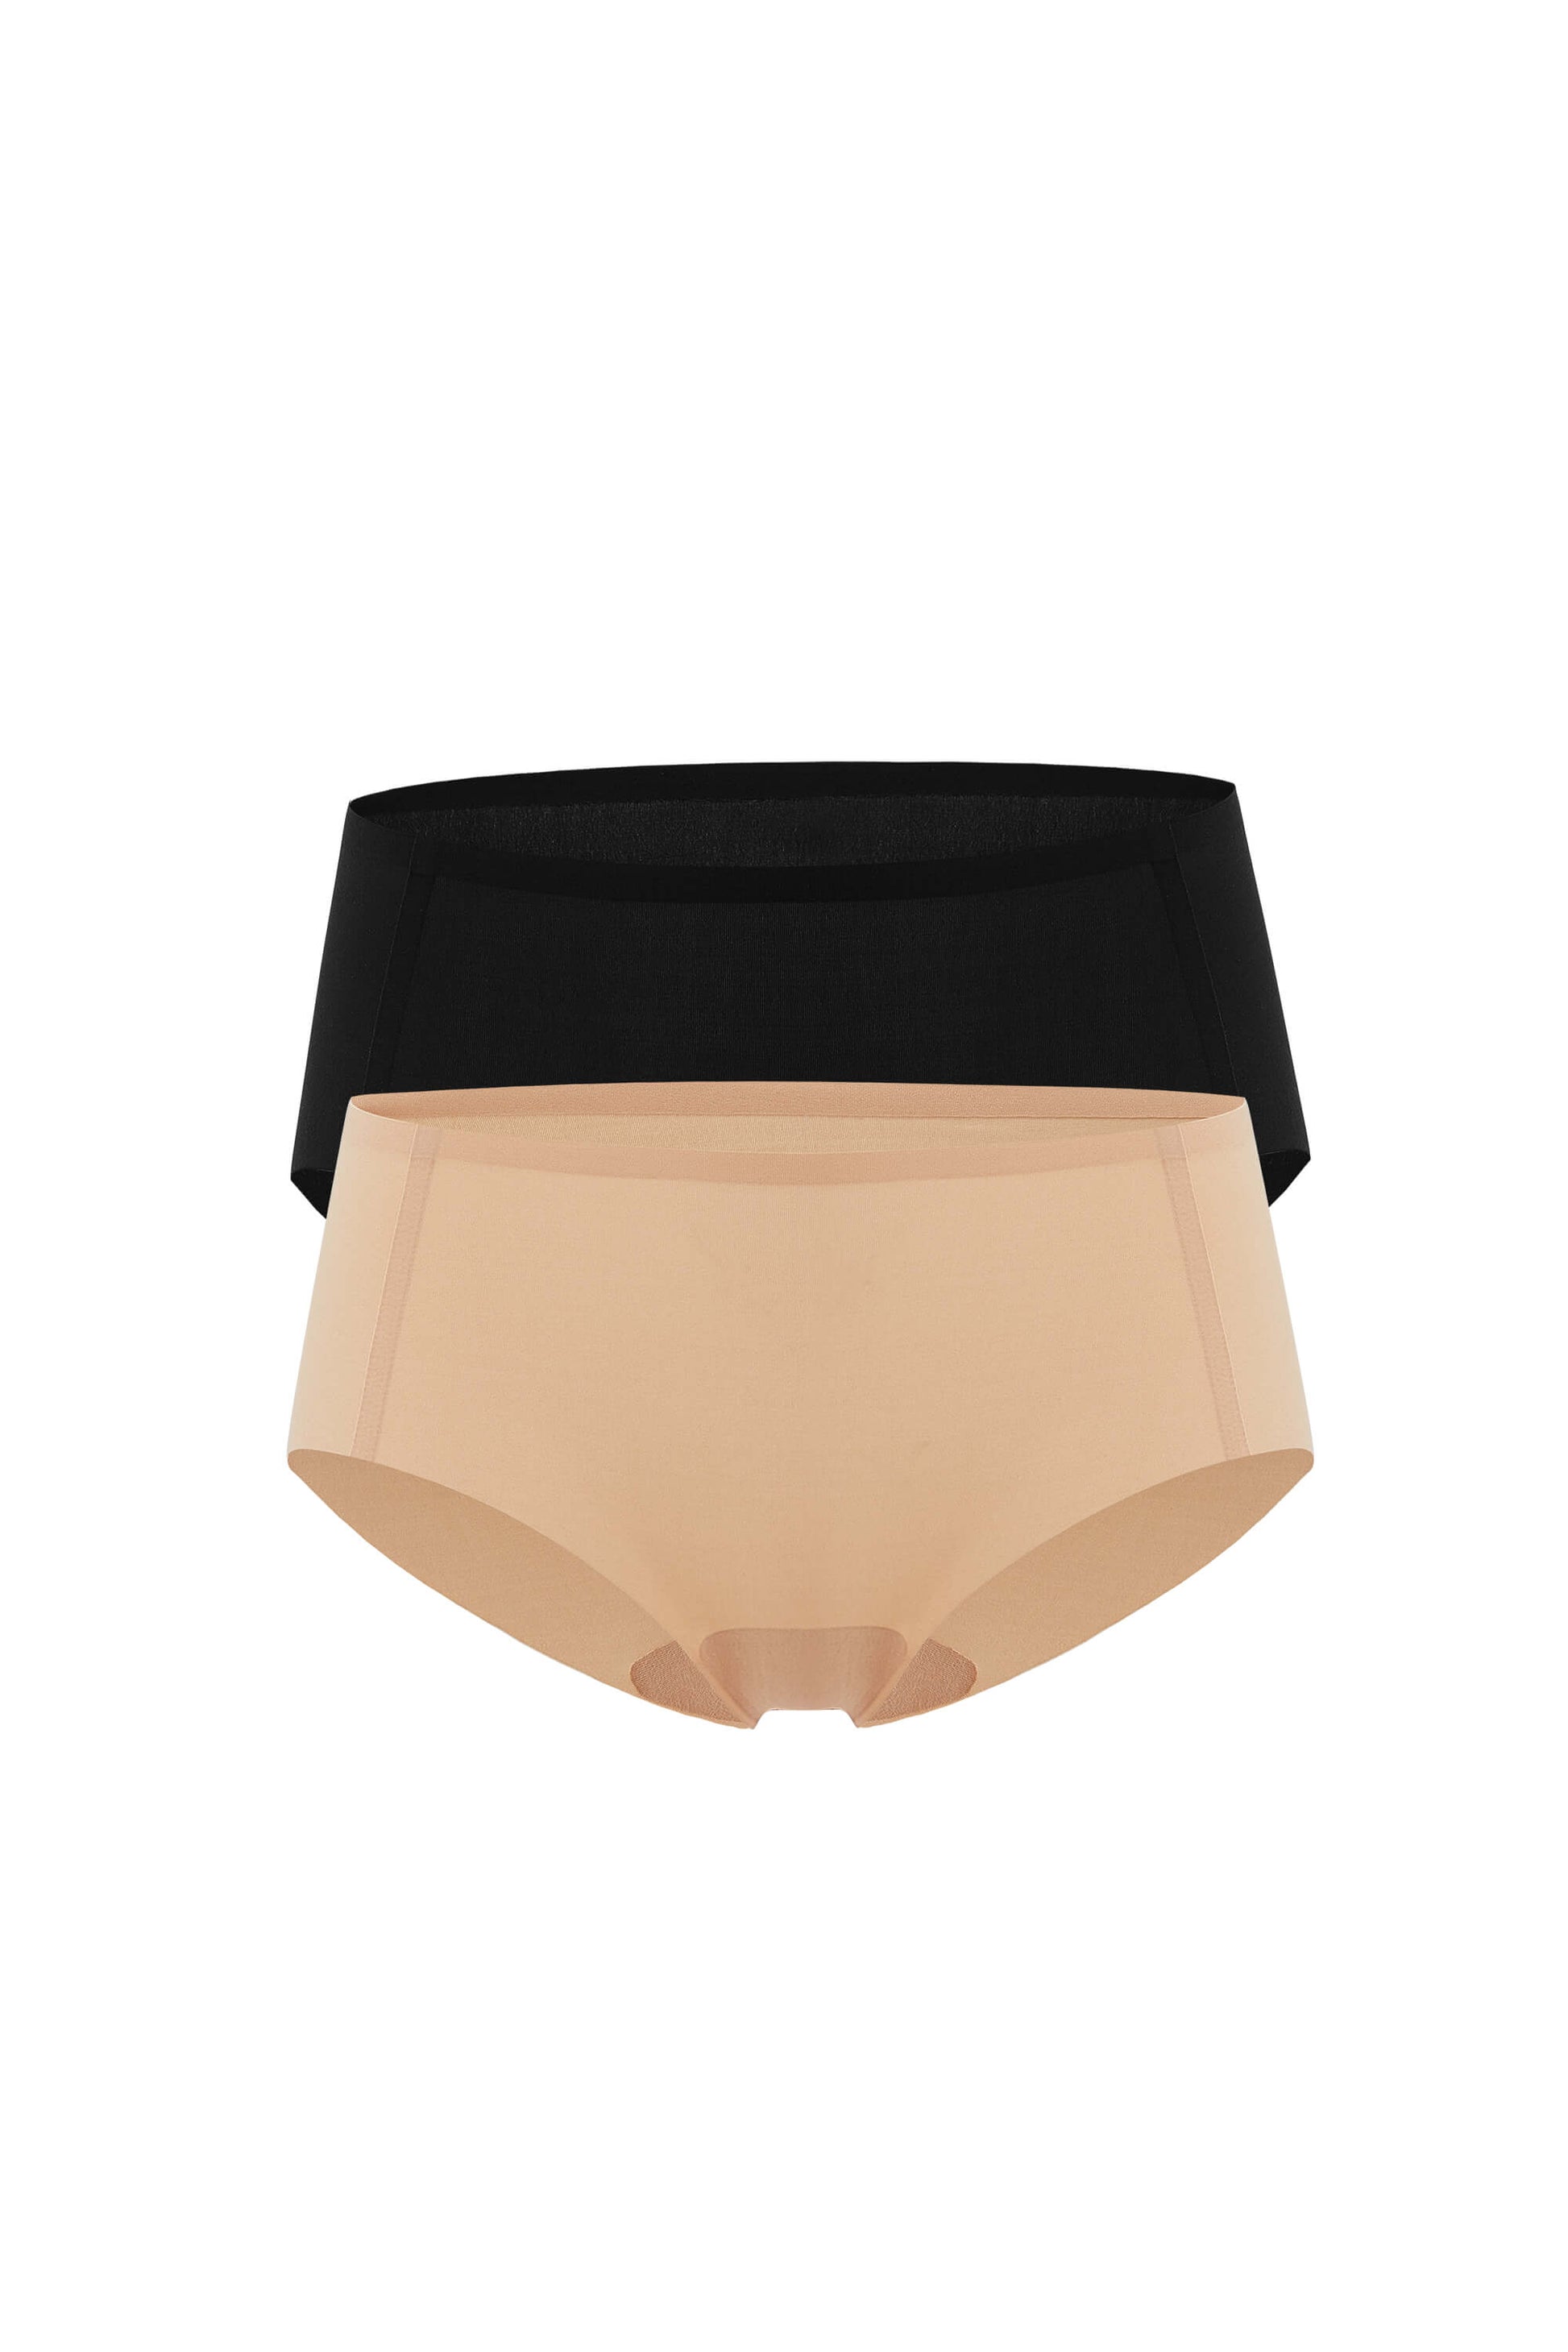 Flat lay image of black underwear and tan underwear